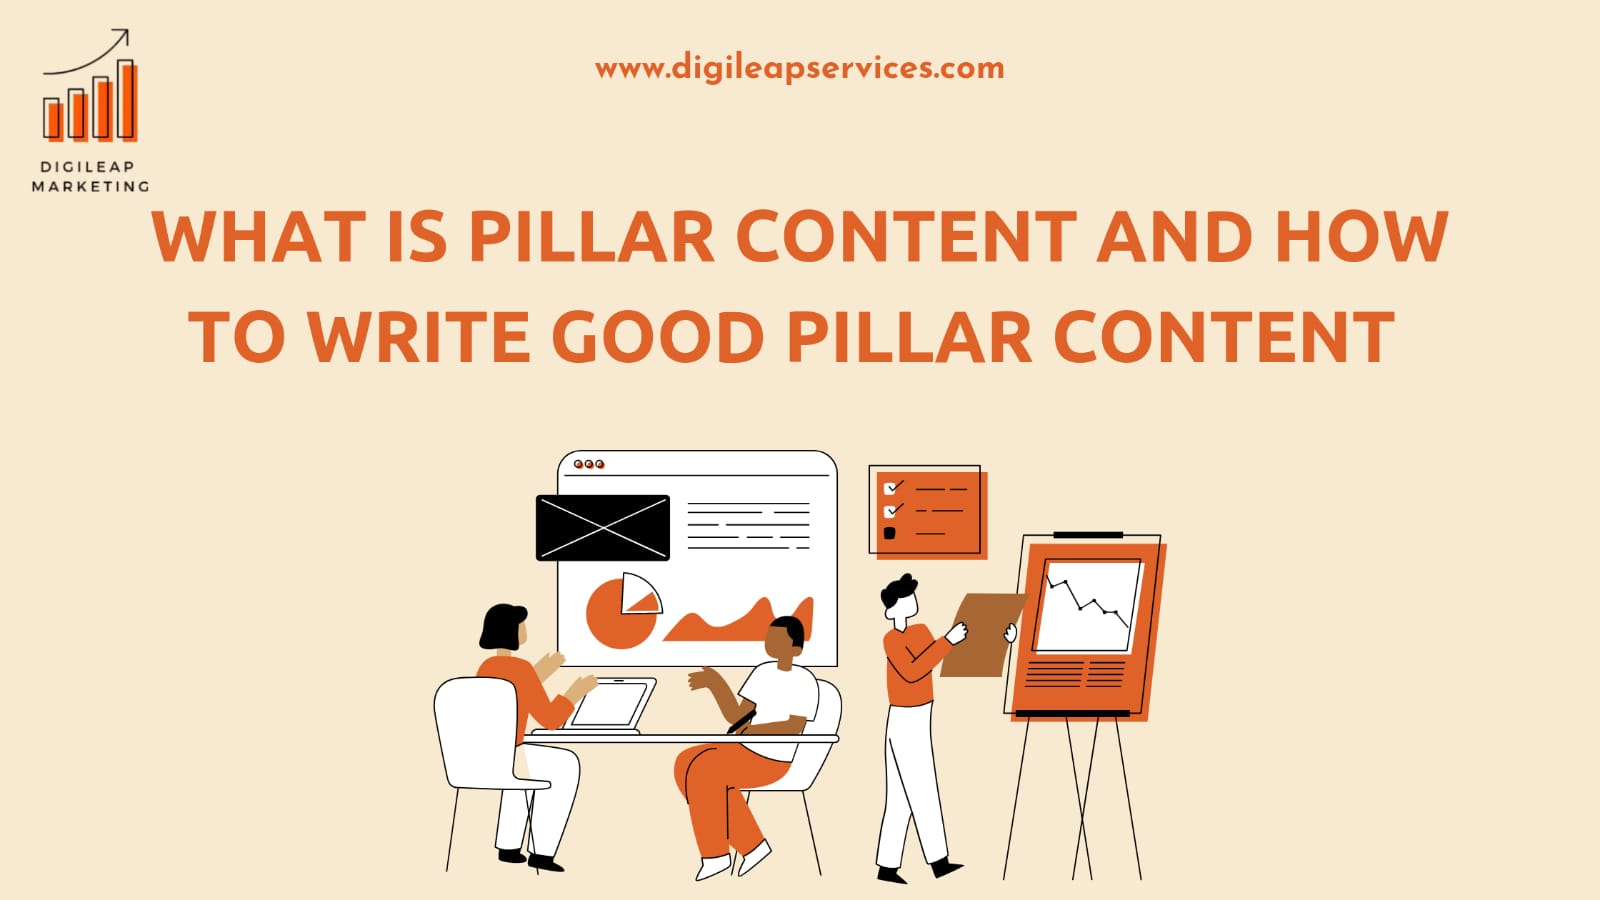 Pillar content. Digital marketing, Tips to write good pillar content, good pillar content, Tips to write pillar content